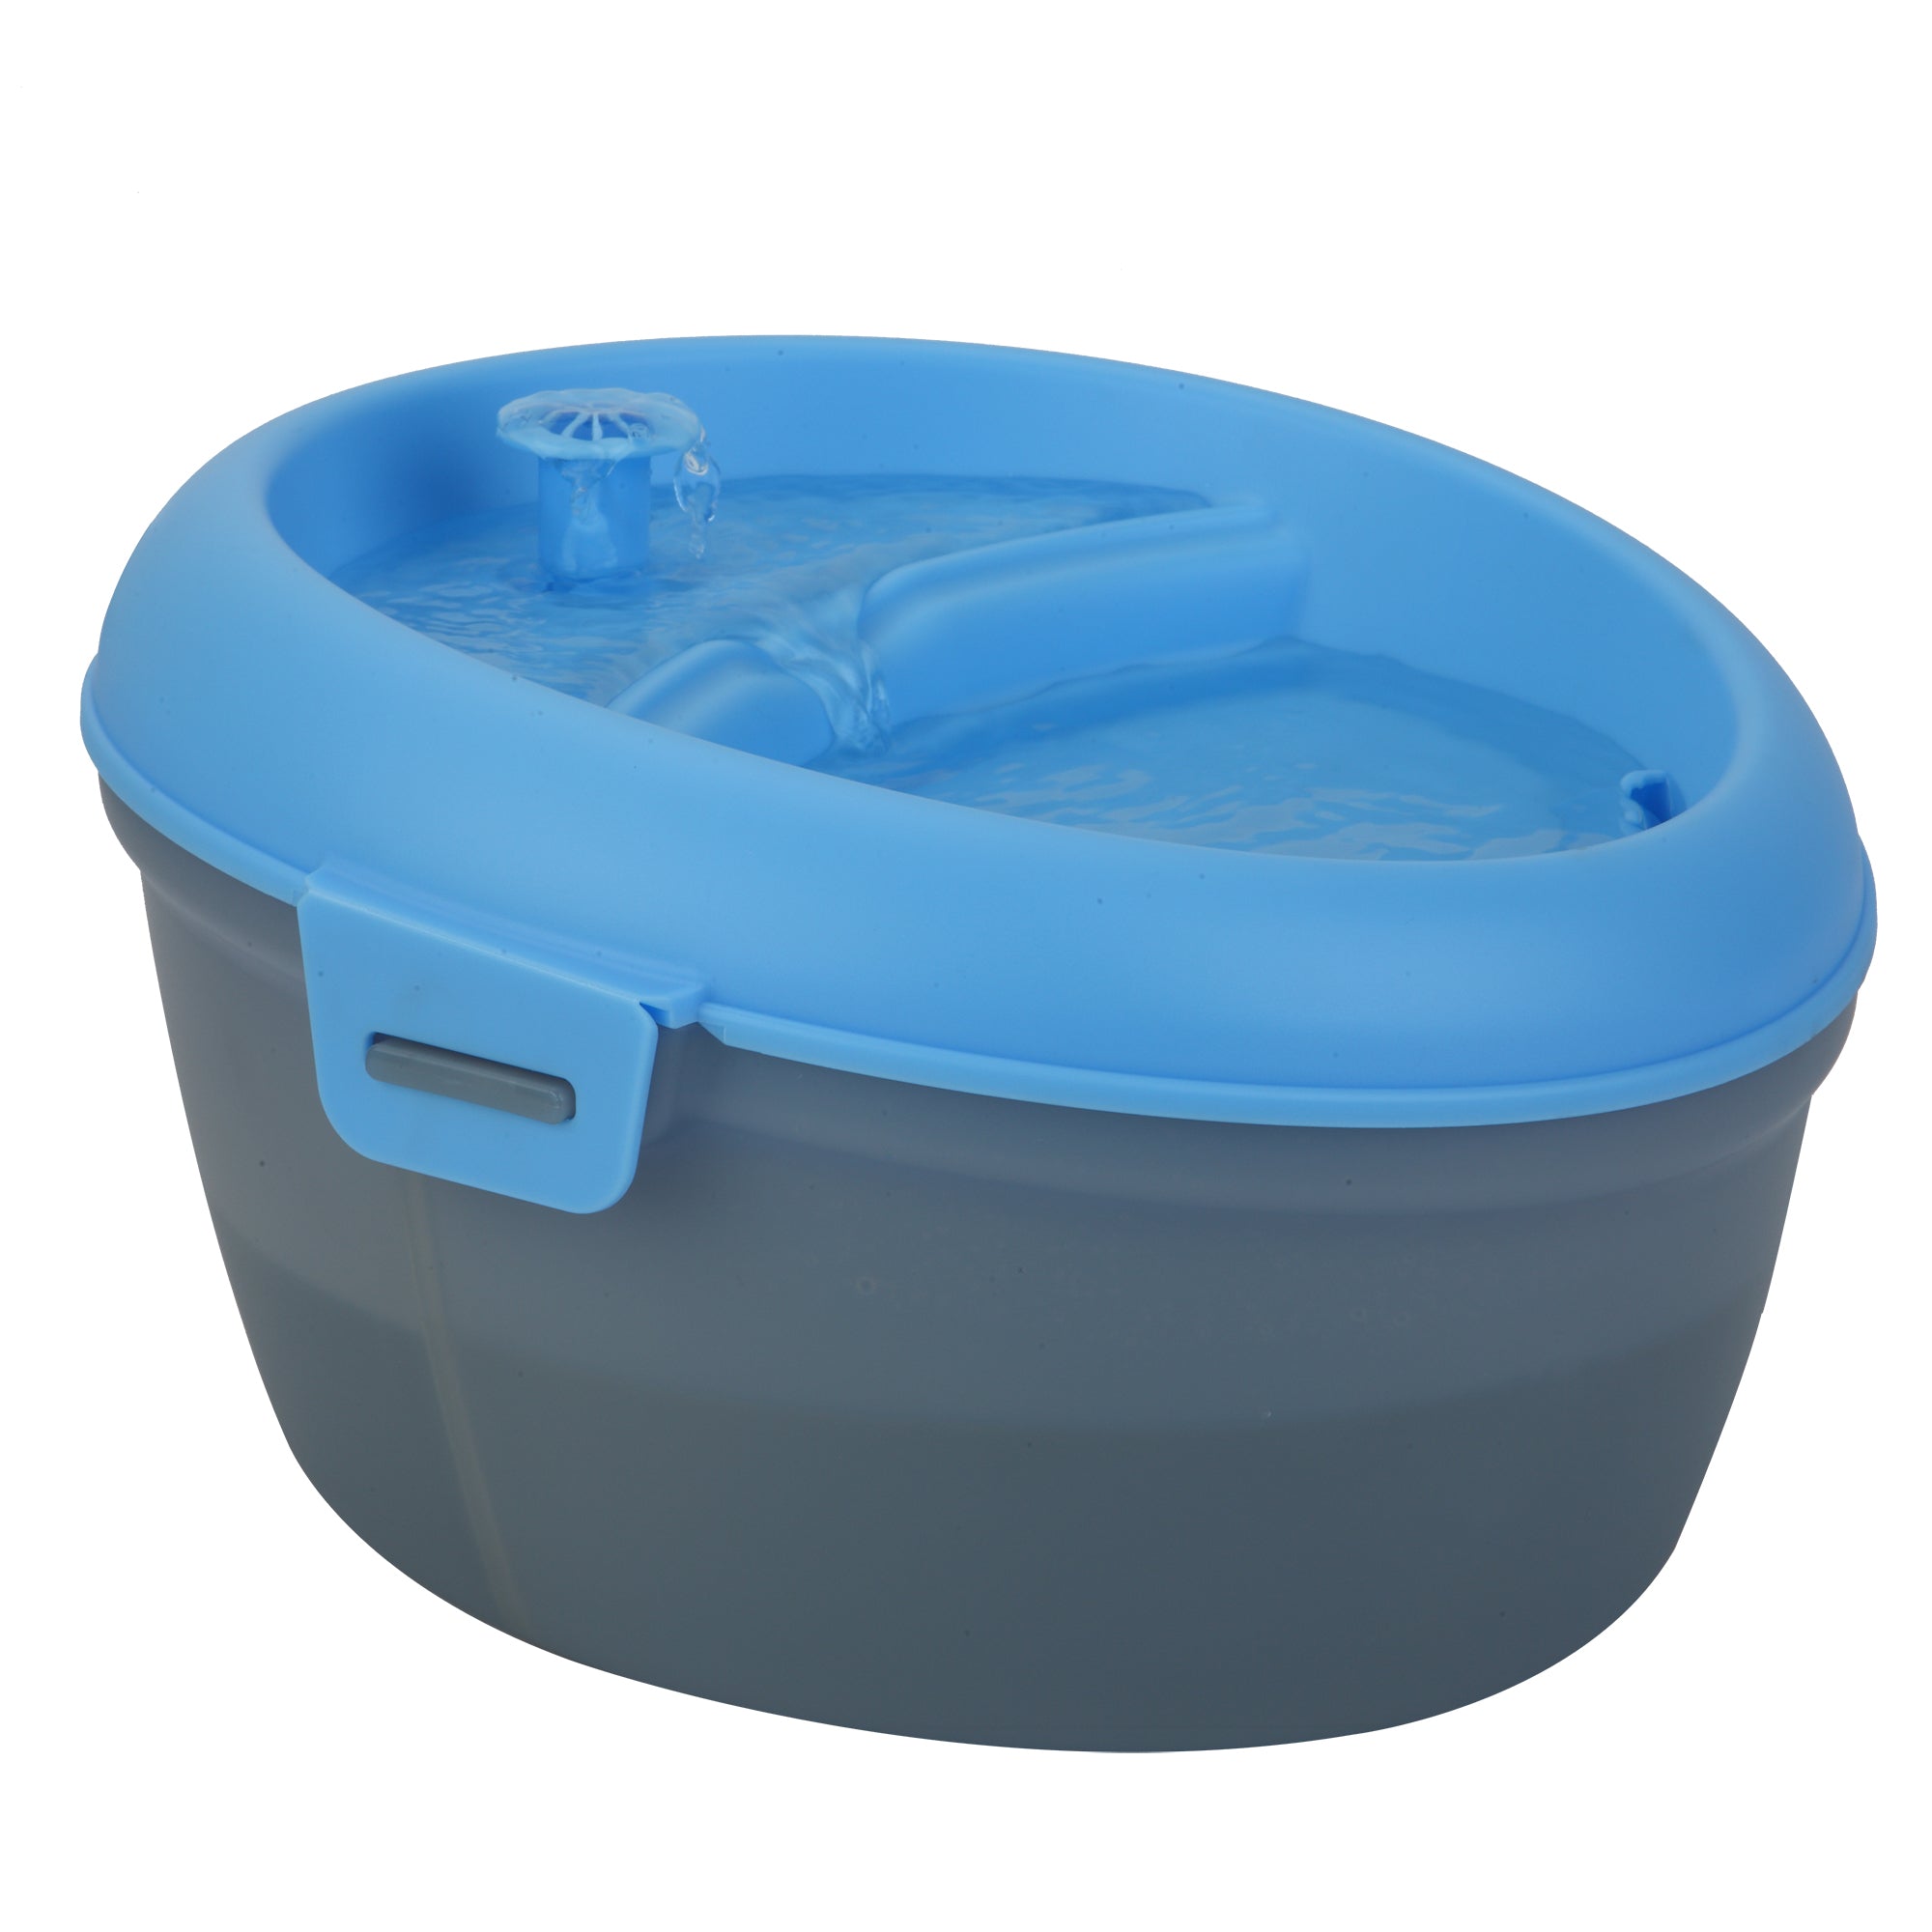 CoolerDog Healthspring pet fountain, 6 liter, blue/gray, side view, water running